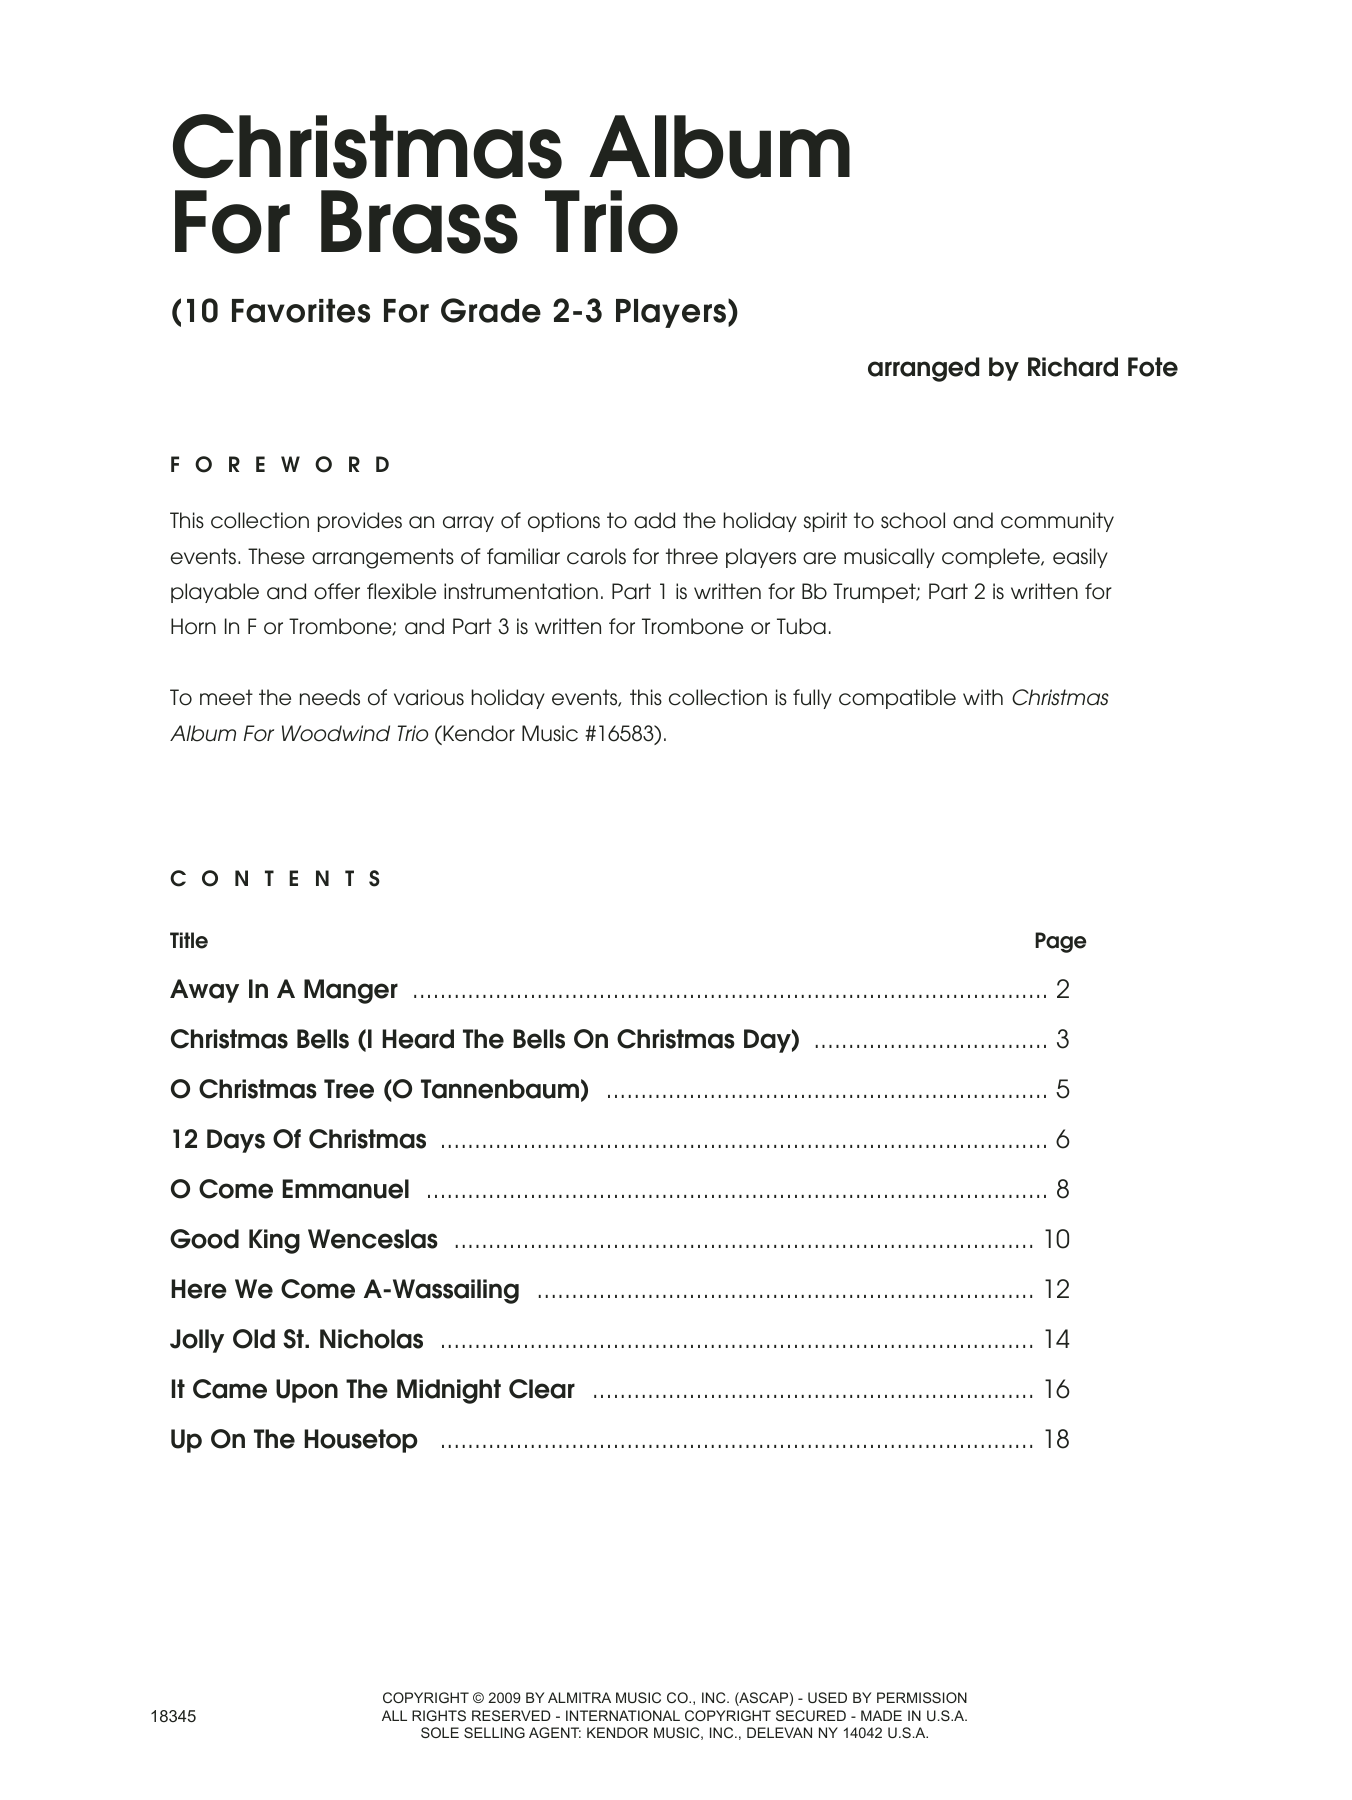 Download Fote Christmas Album For Brass Trio - Full S Sheet Music